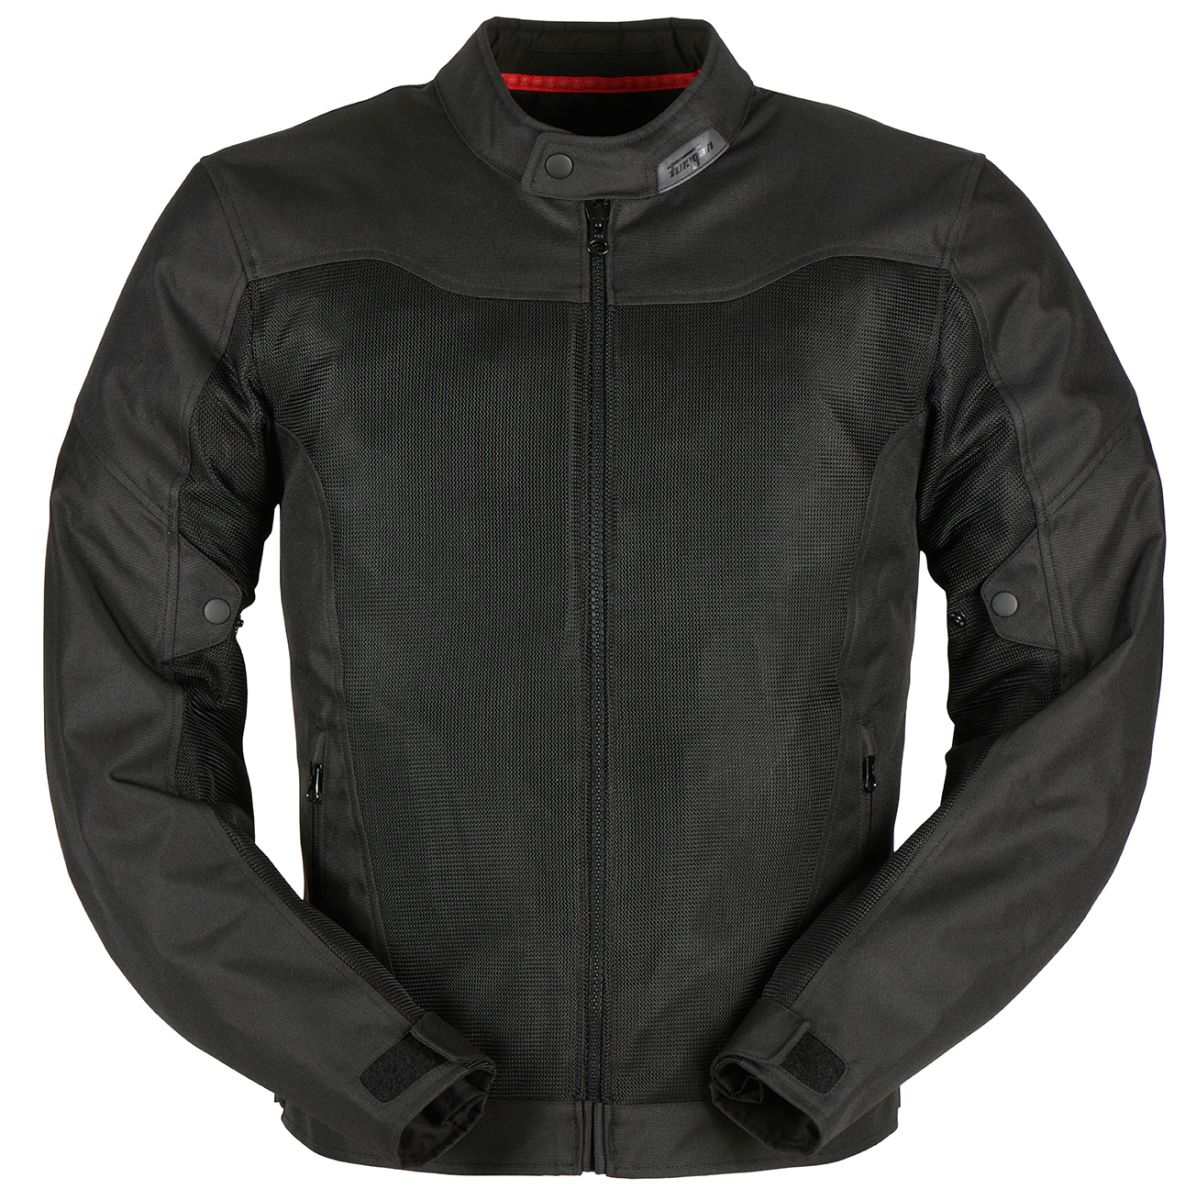 Image of Furygan Mistral 3 Evo Jacket Black Talla S